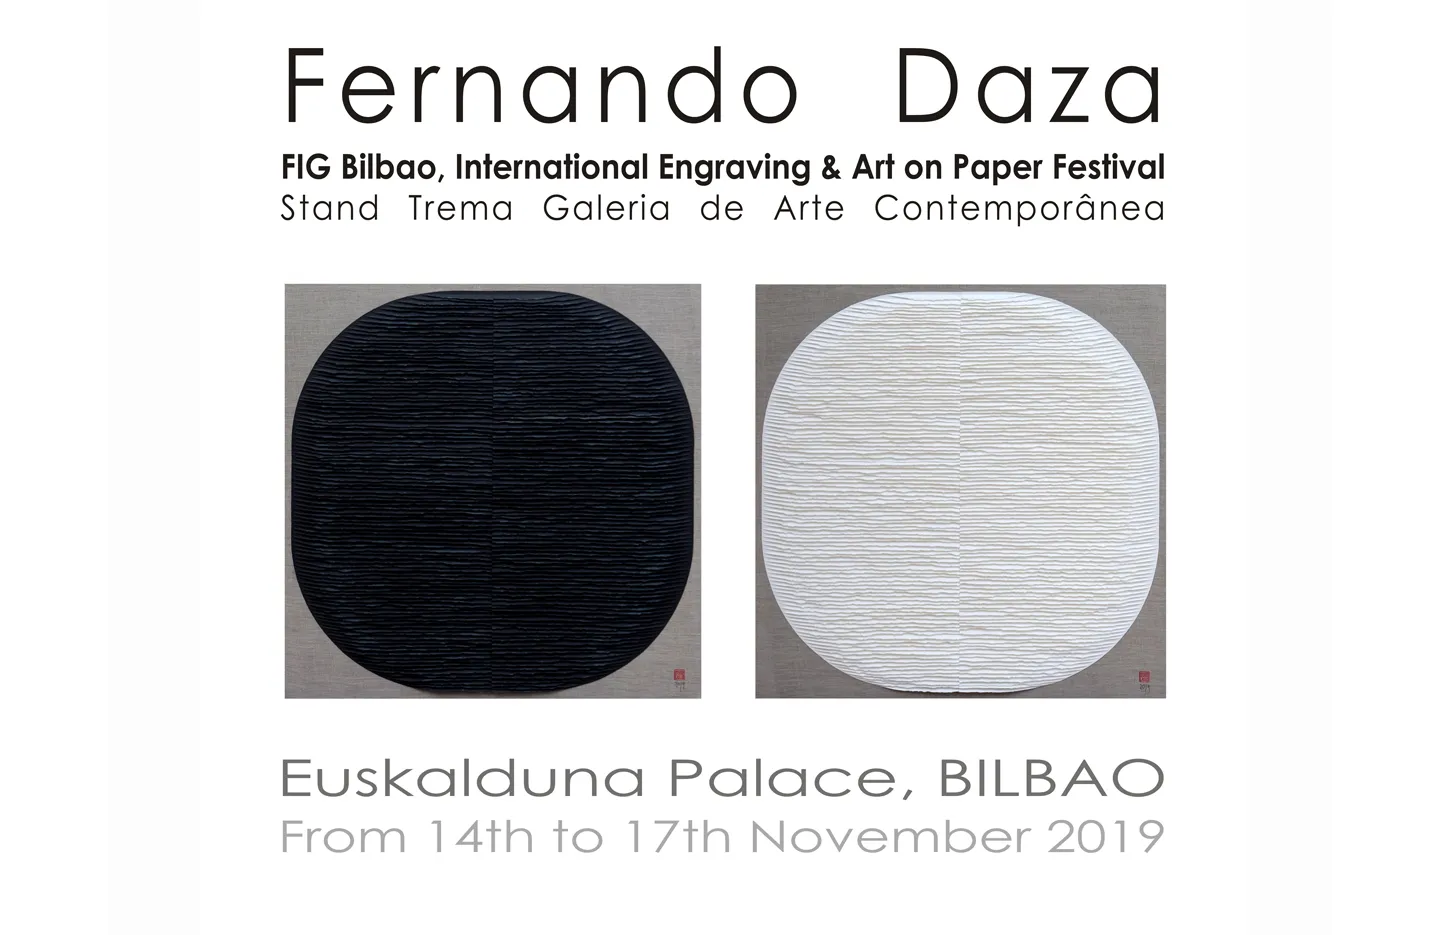 Fernando Daza Visual Artist - evento 2019 fig Bilbao